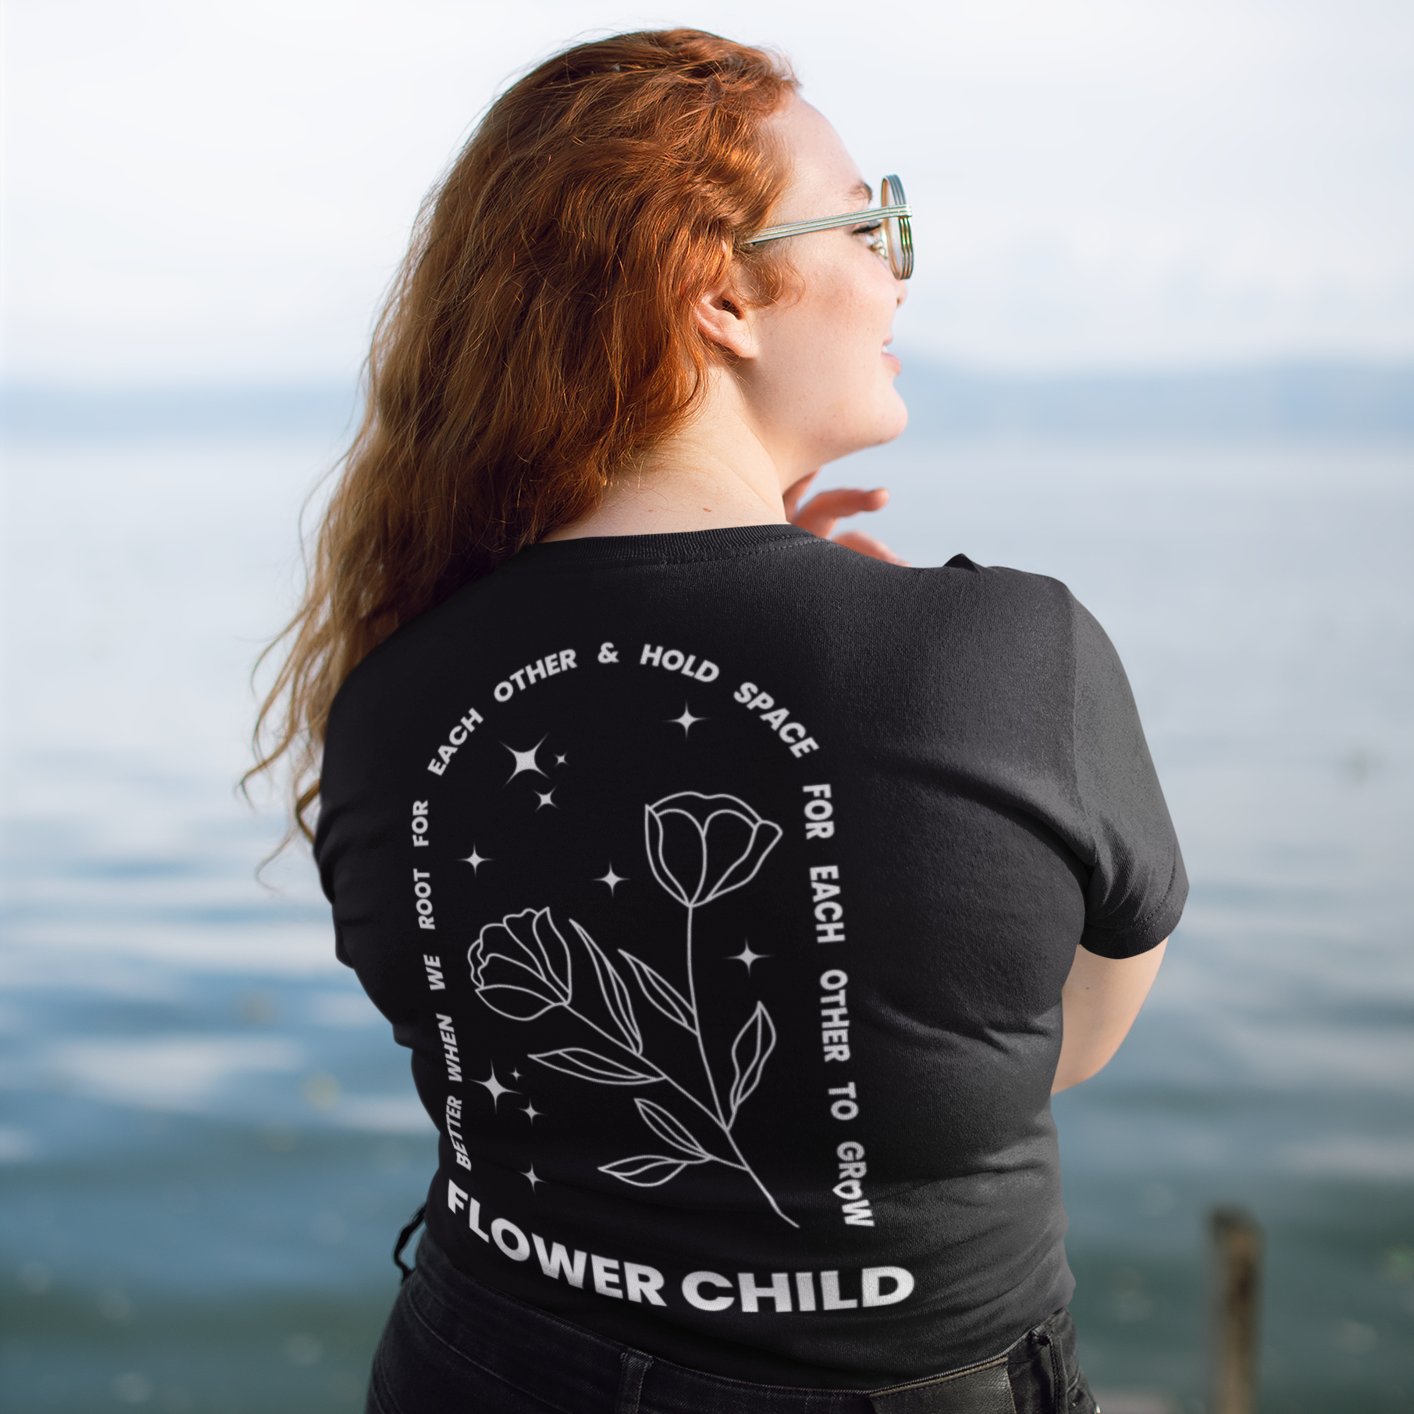 Flower Child Organic T-Shirt